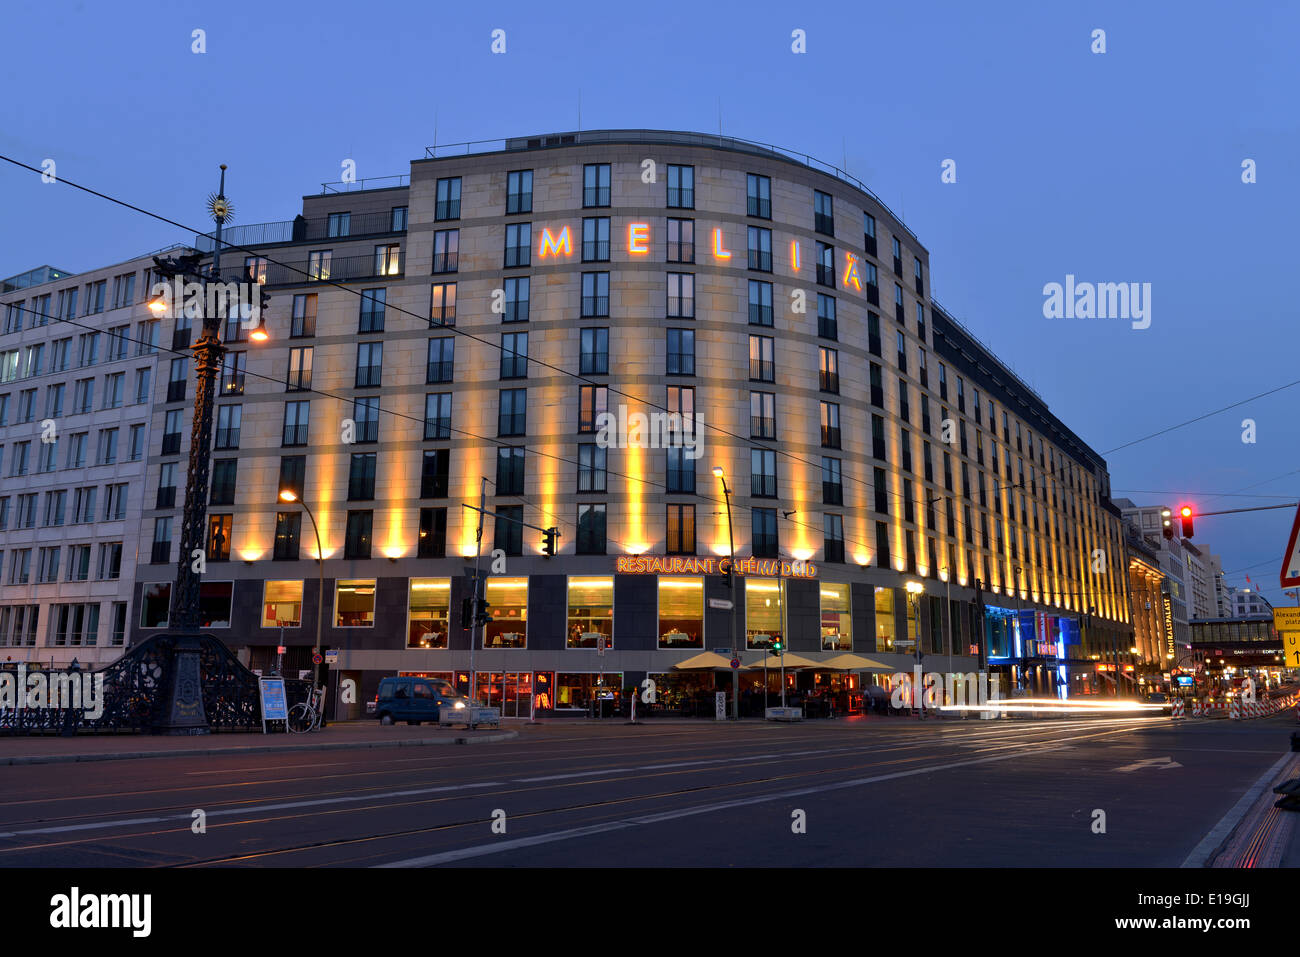 L'Hotel Melia, Friedrichstrasse, nel quartiere Mitte di Berlino, Deutschland Foto Stock